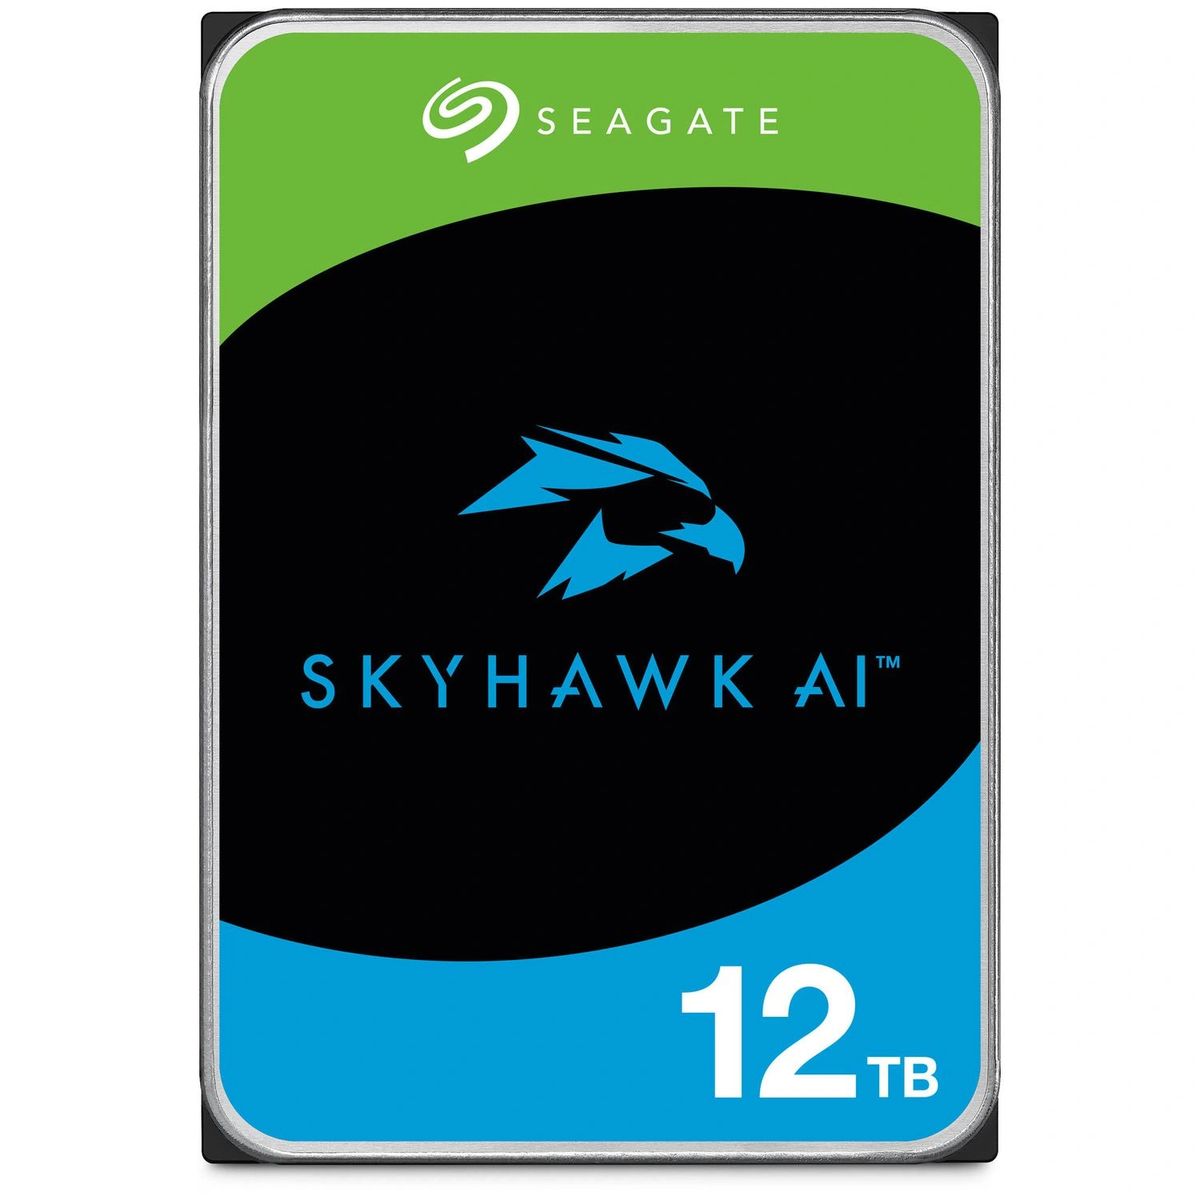 SEAGATE : SKYHAWK AI,3.5inch ,12TB HDD ST12000VE001-SKYHAWK